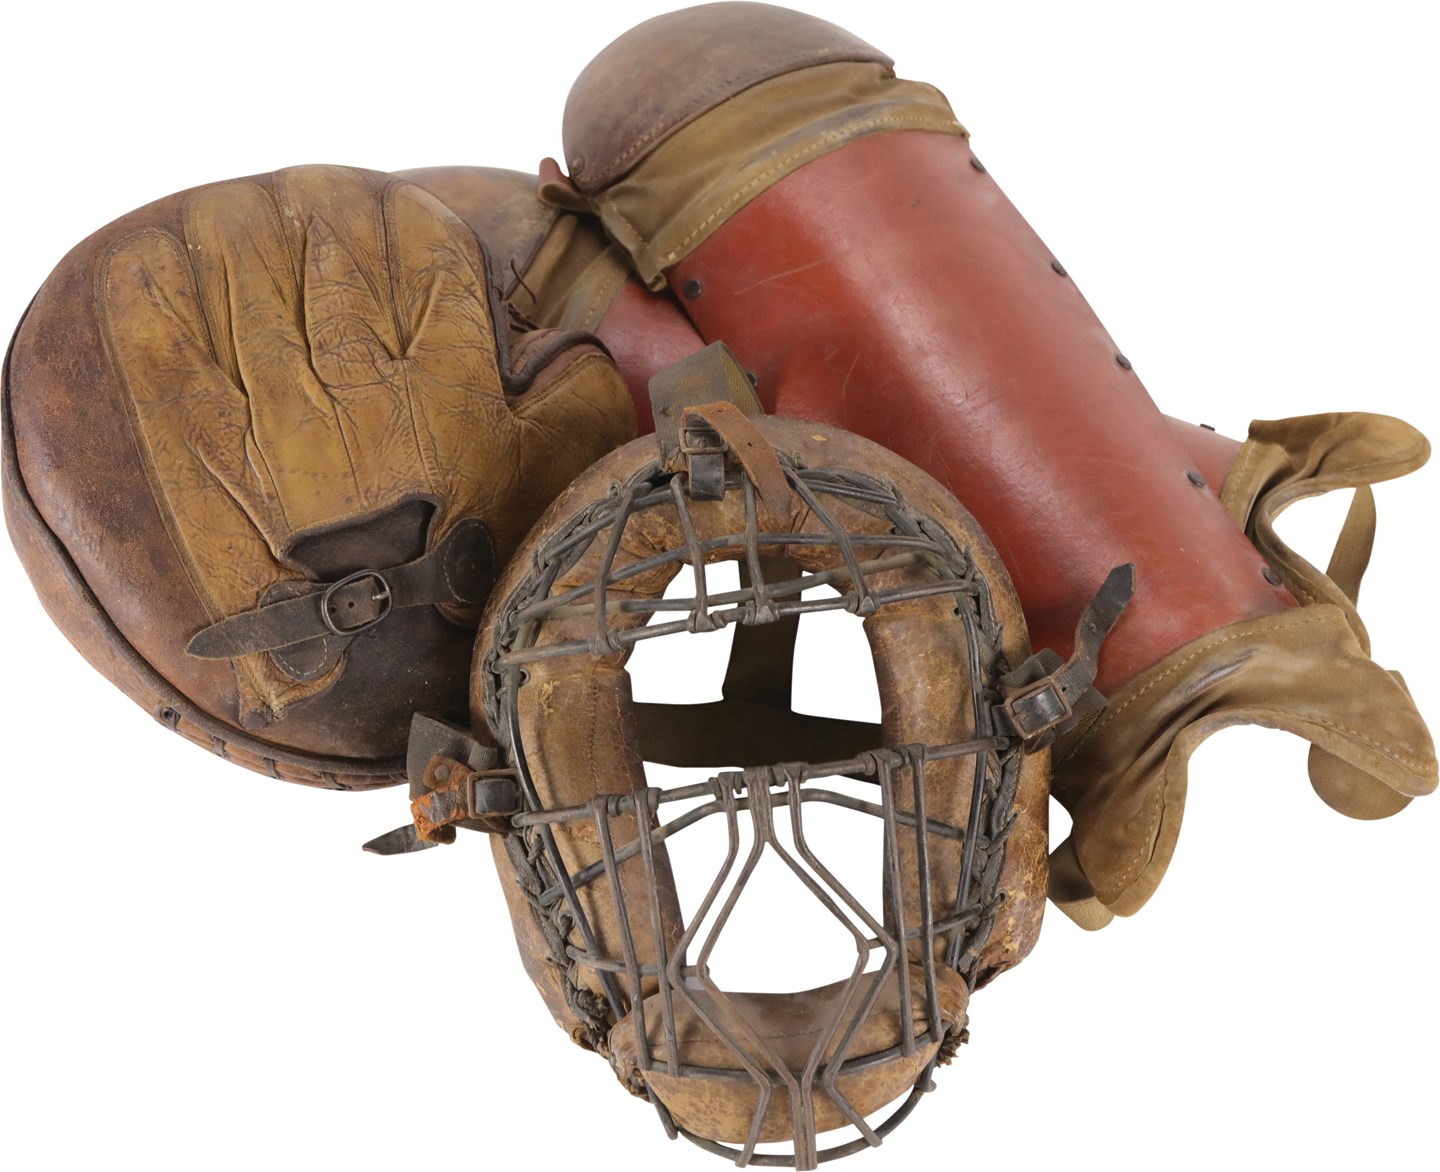 - Early 1900s Catcher's Equipment